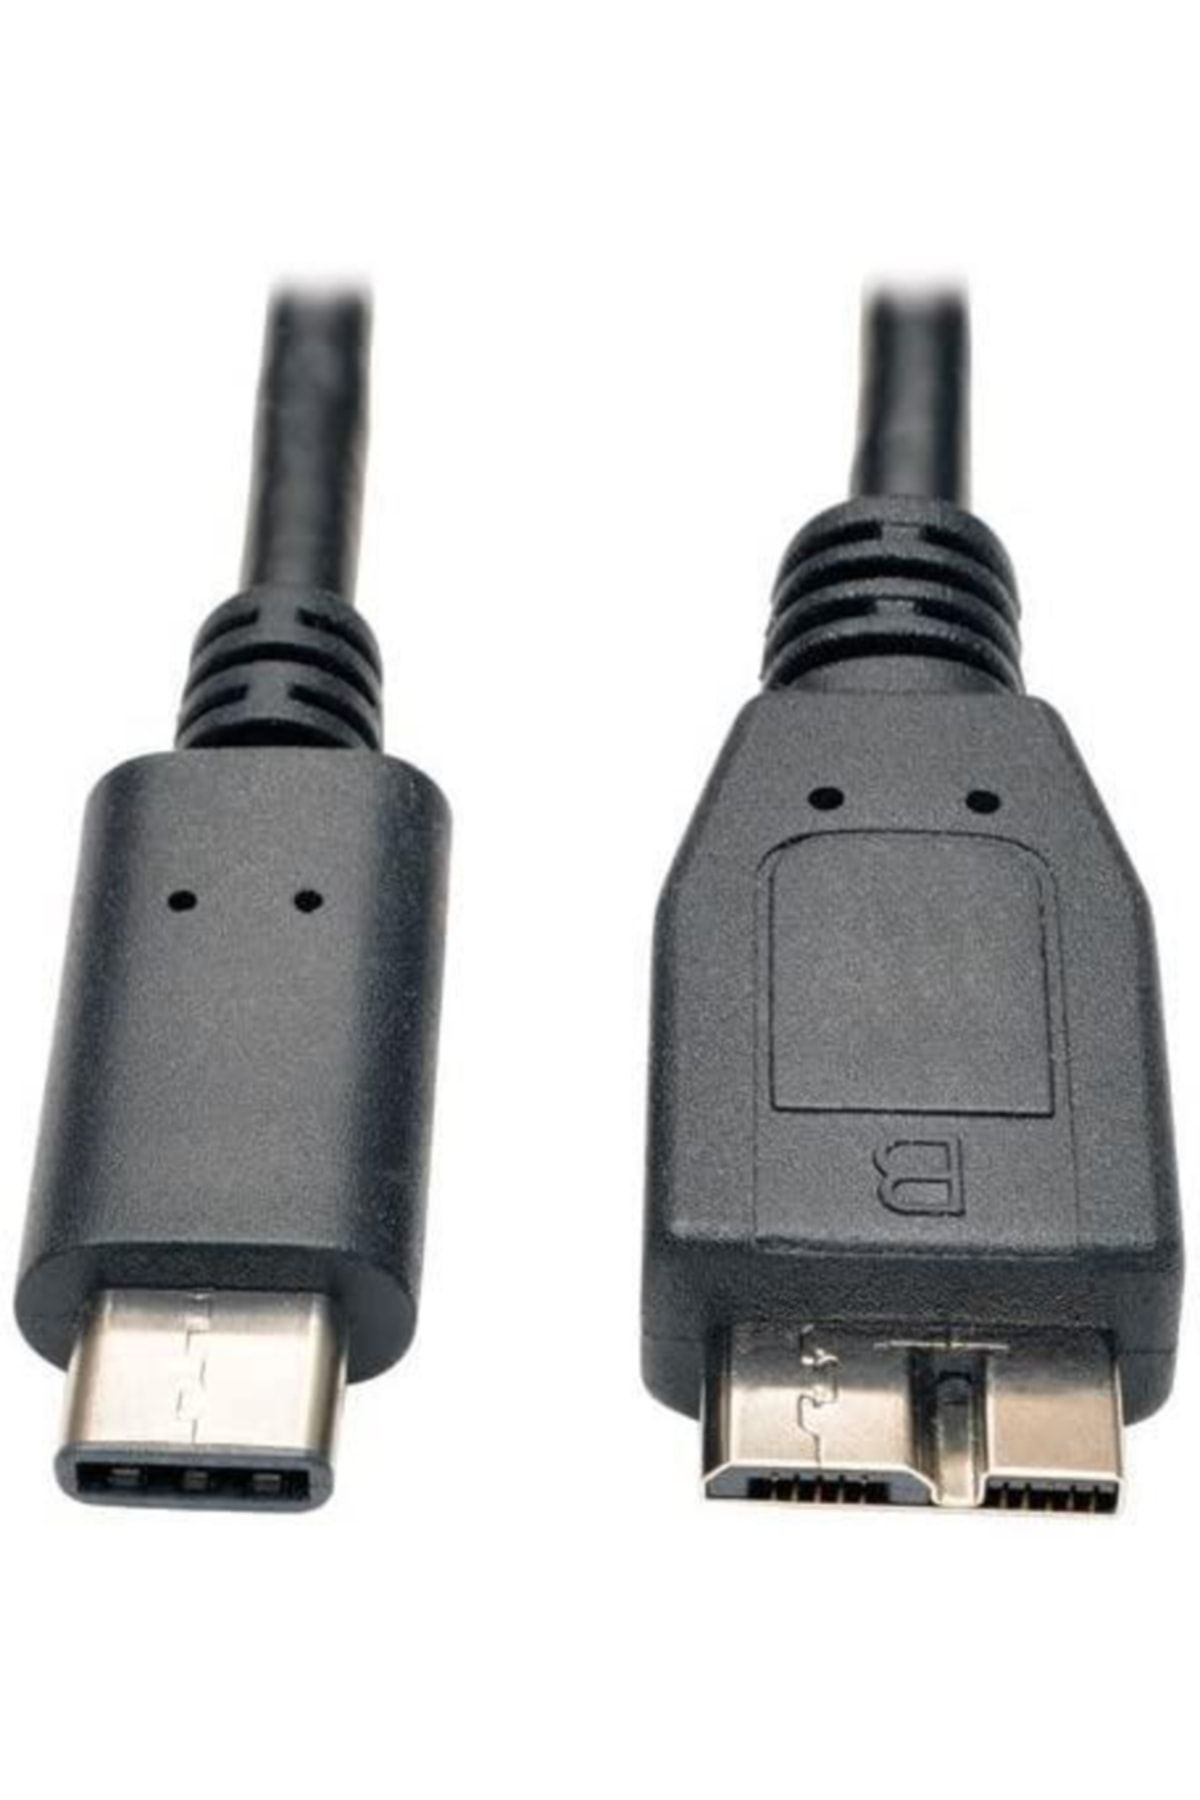 Micro usb usb 3.2 gen1. USB 3.1 gen1 Micro-b. USB 3.2 gen1 Type-a. Кабель USB 3 Micro b - Thunderbolt. USB 3.0 Type c Micro-b.